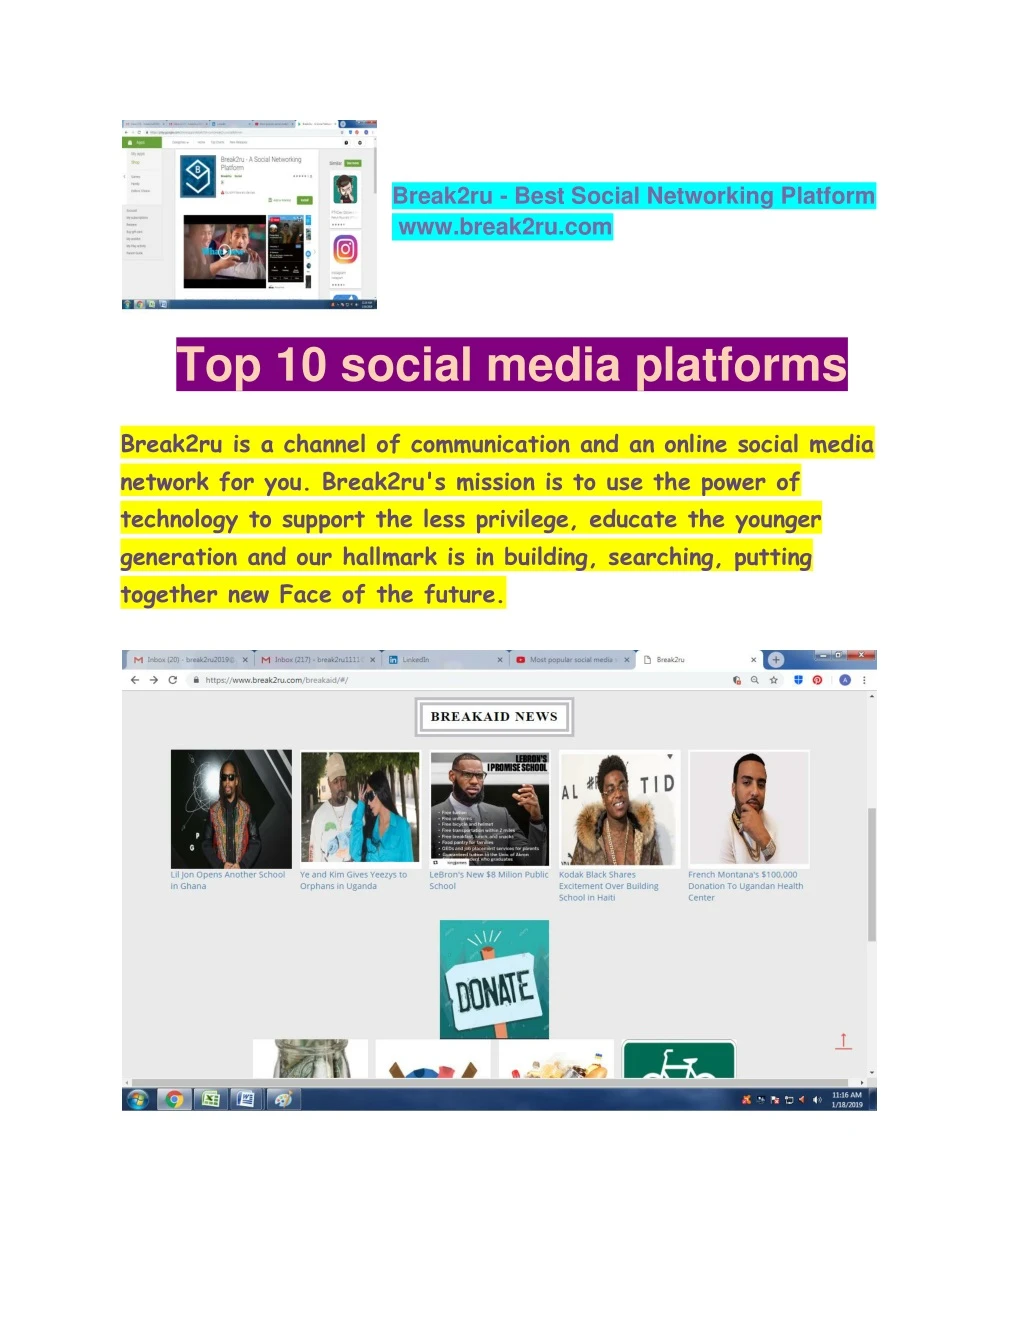 break2ru best social networking platform